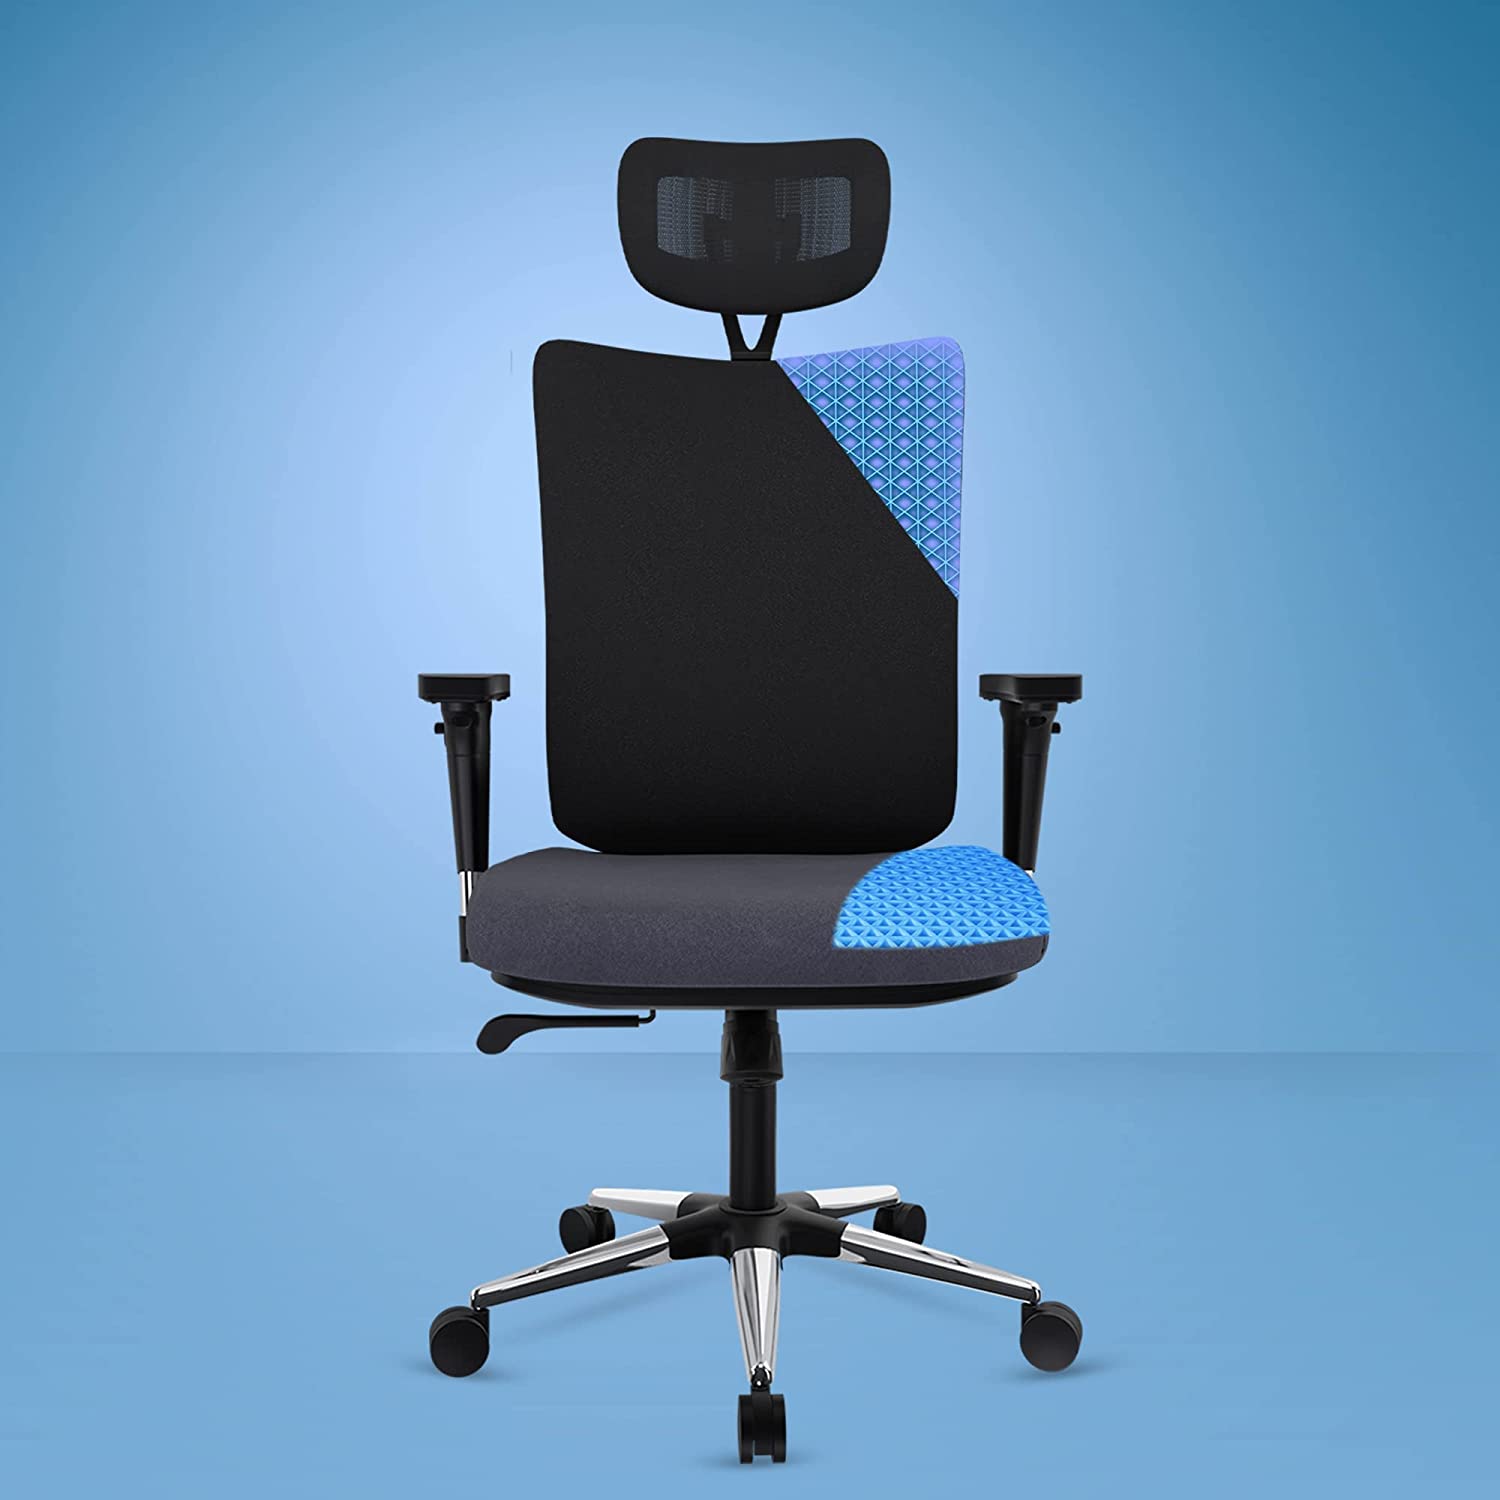 The Sleep Company SmartGrid Chair